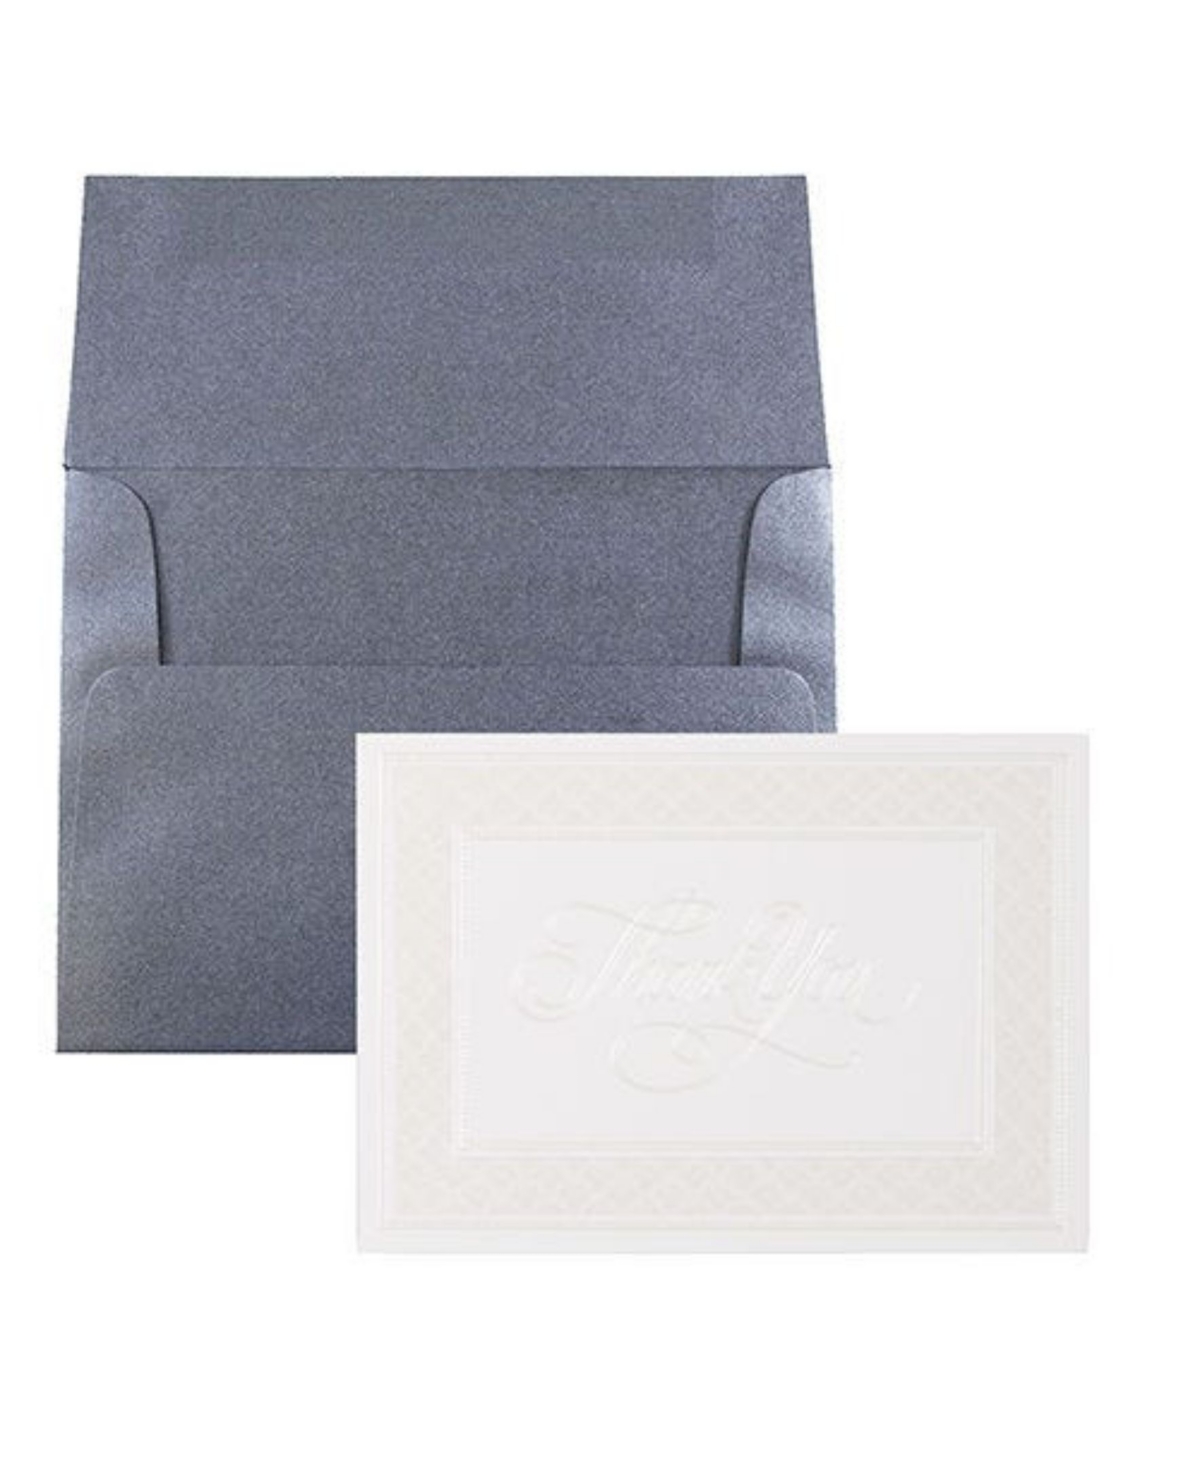 Jam Paper Thank You Card Sets - 25 Cards and Envelopes - Border Cards Anthracite Envelopes